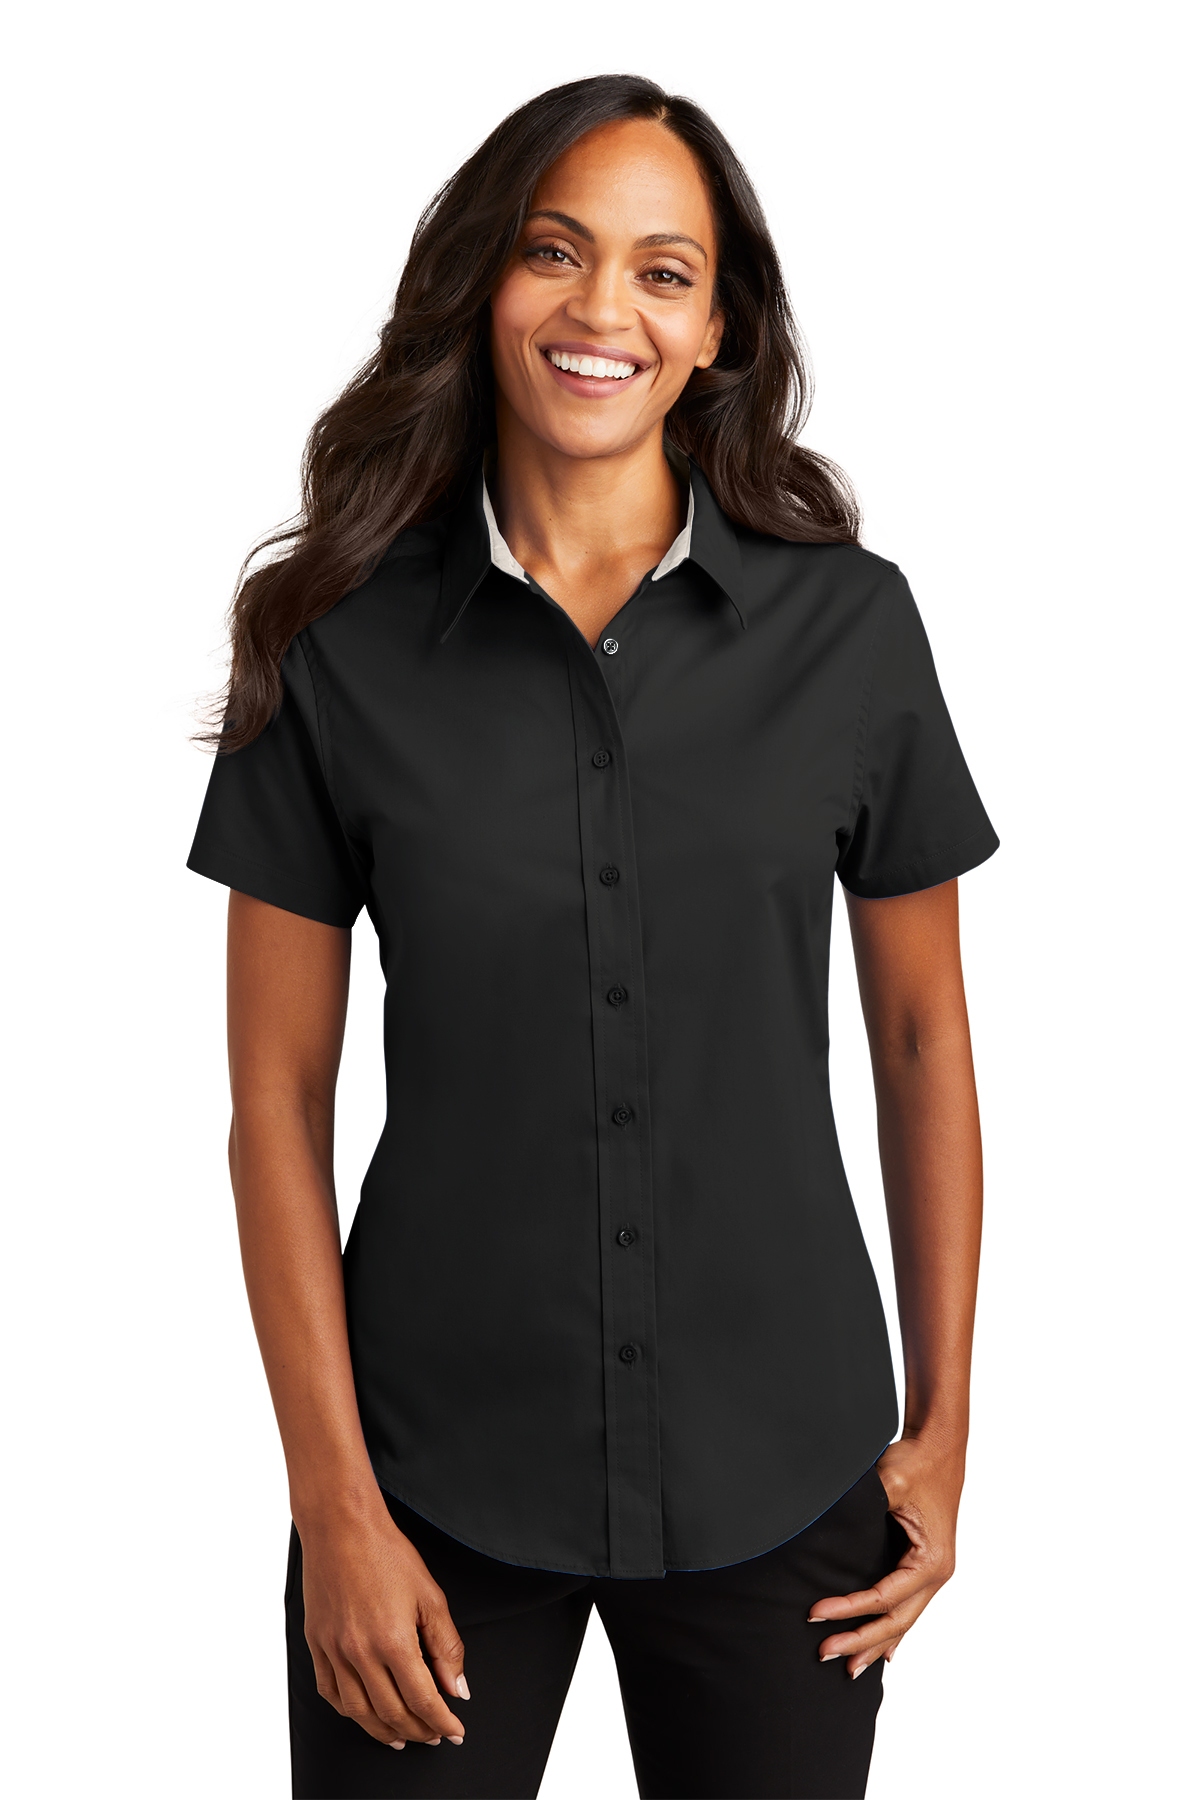 | Authority Port Sleeve Authority Care Short Shirt | Product Easy Port Ladies